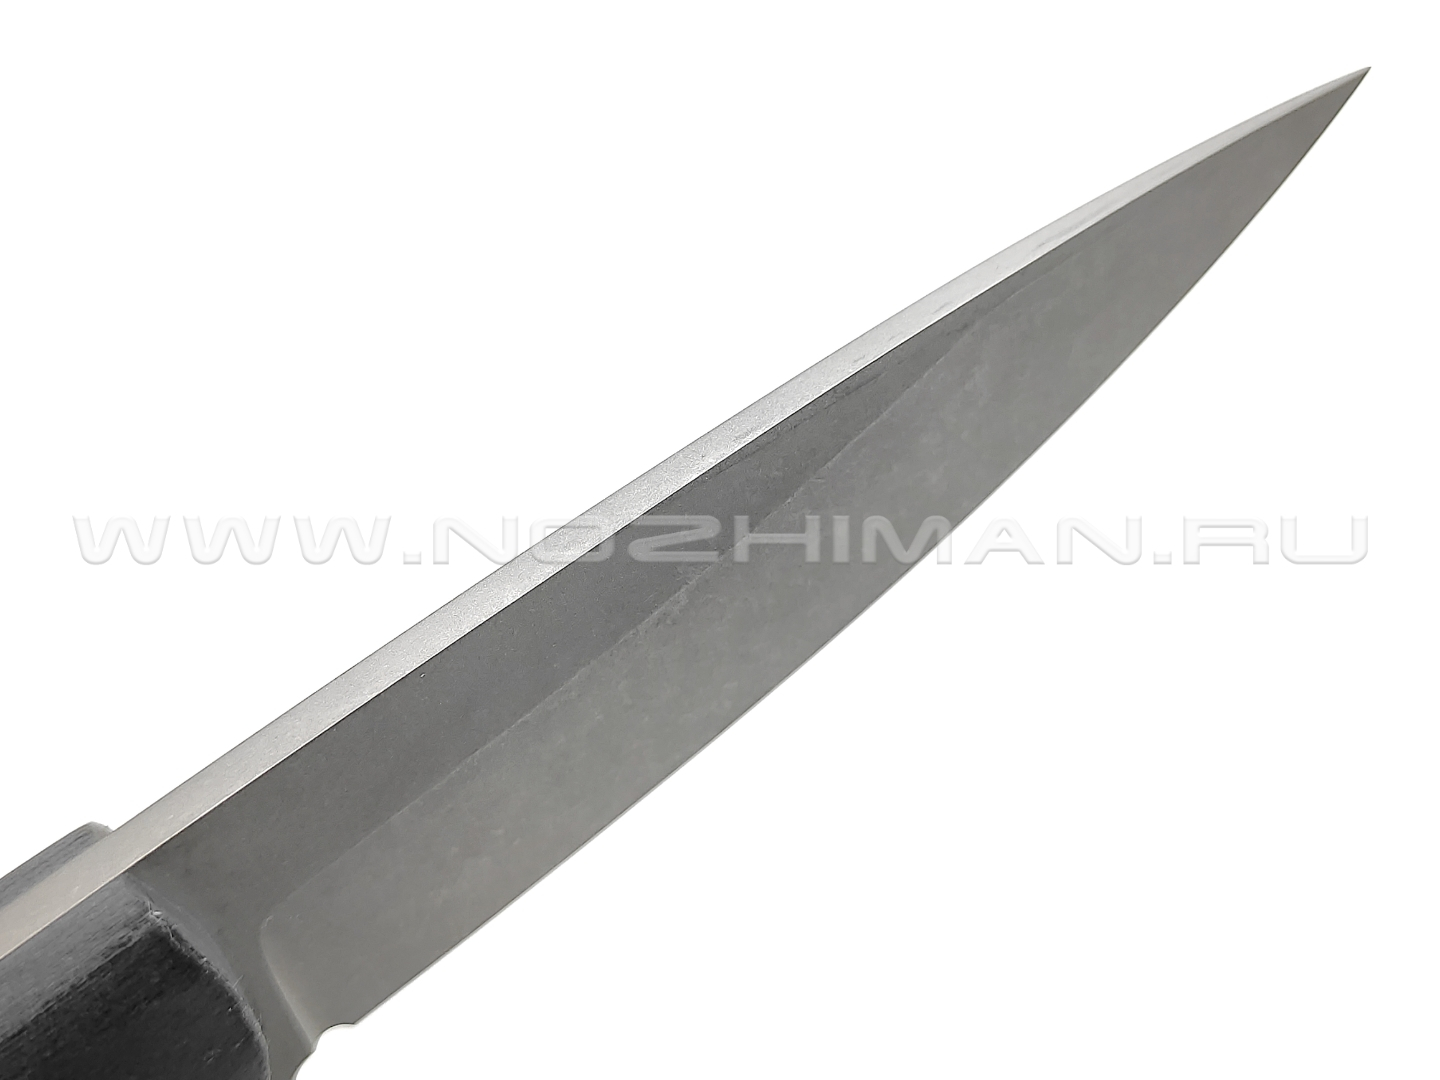 Apus Knives нож Скин-Ду Limited Edition сталь K110, рукоять G10 black & blue